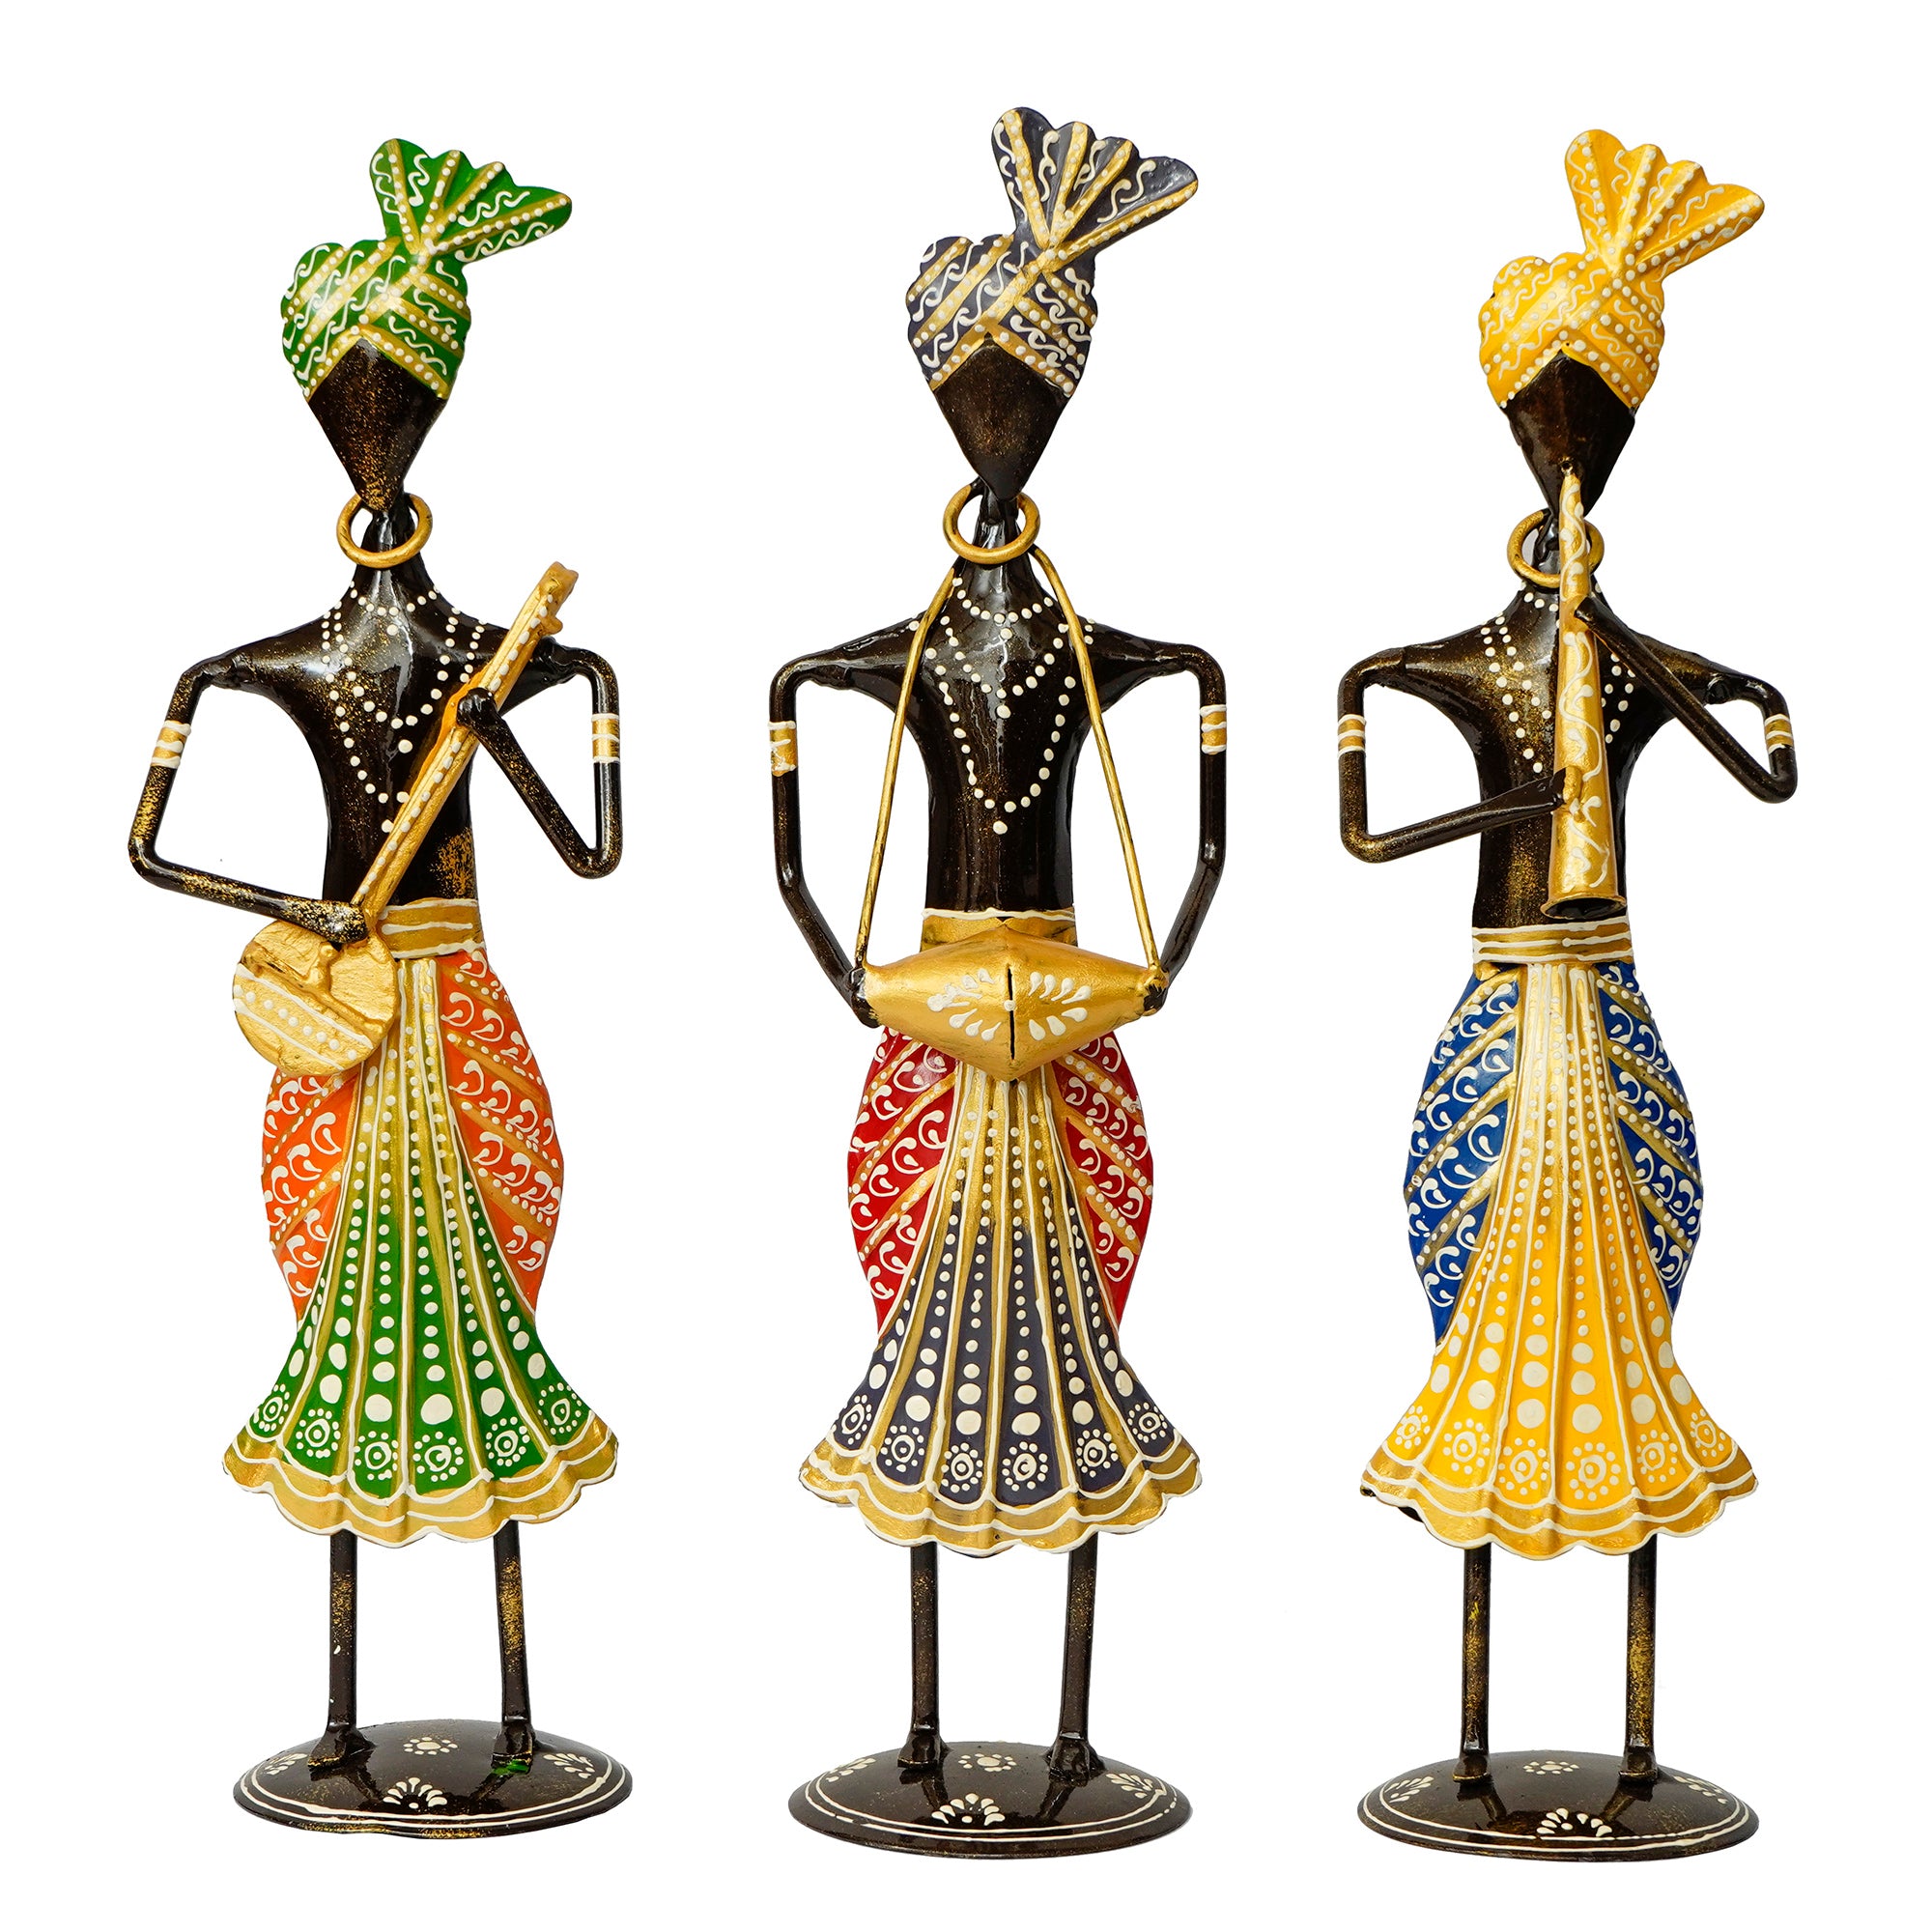 Iron Set of 3 Tribal Man Figurines Playing Banjo, Dholak, Trumpet Musical Instruments Decorative Showpiece 2